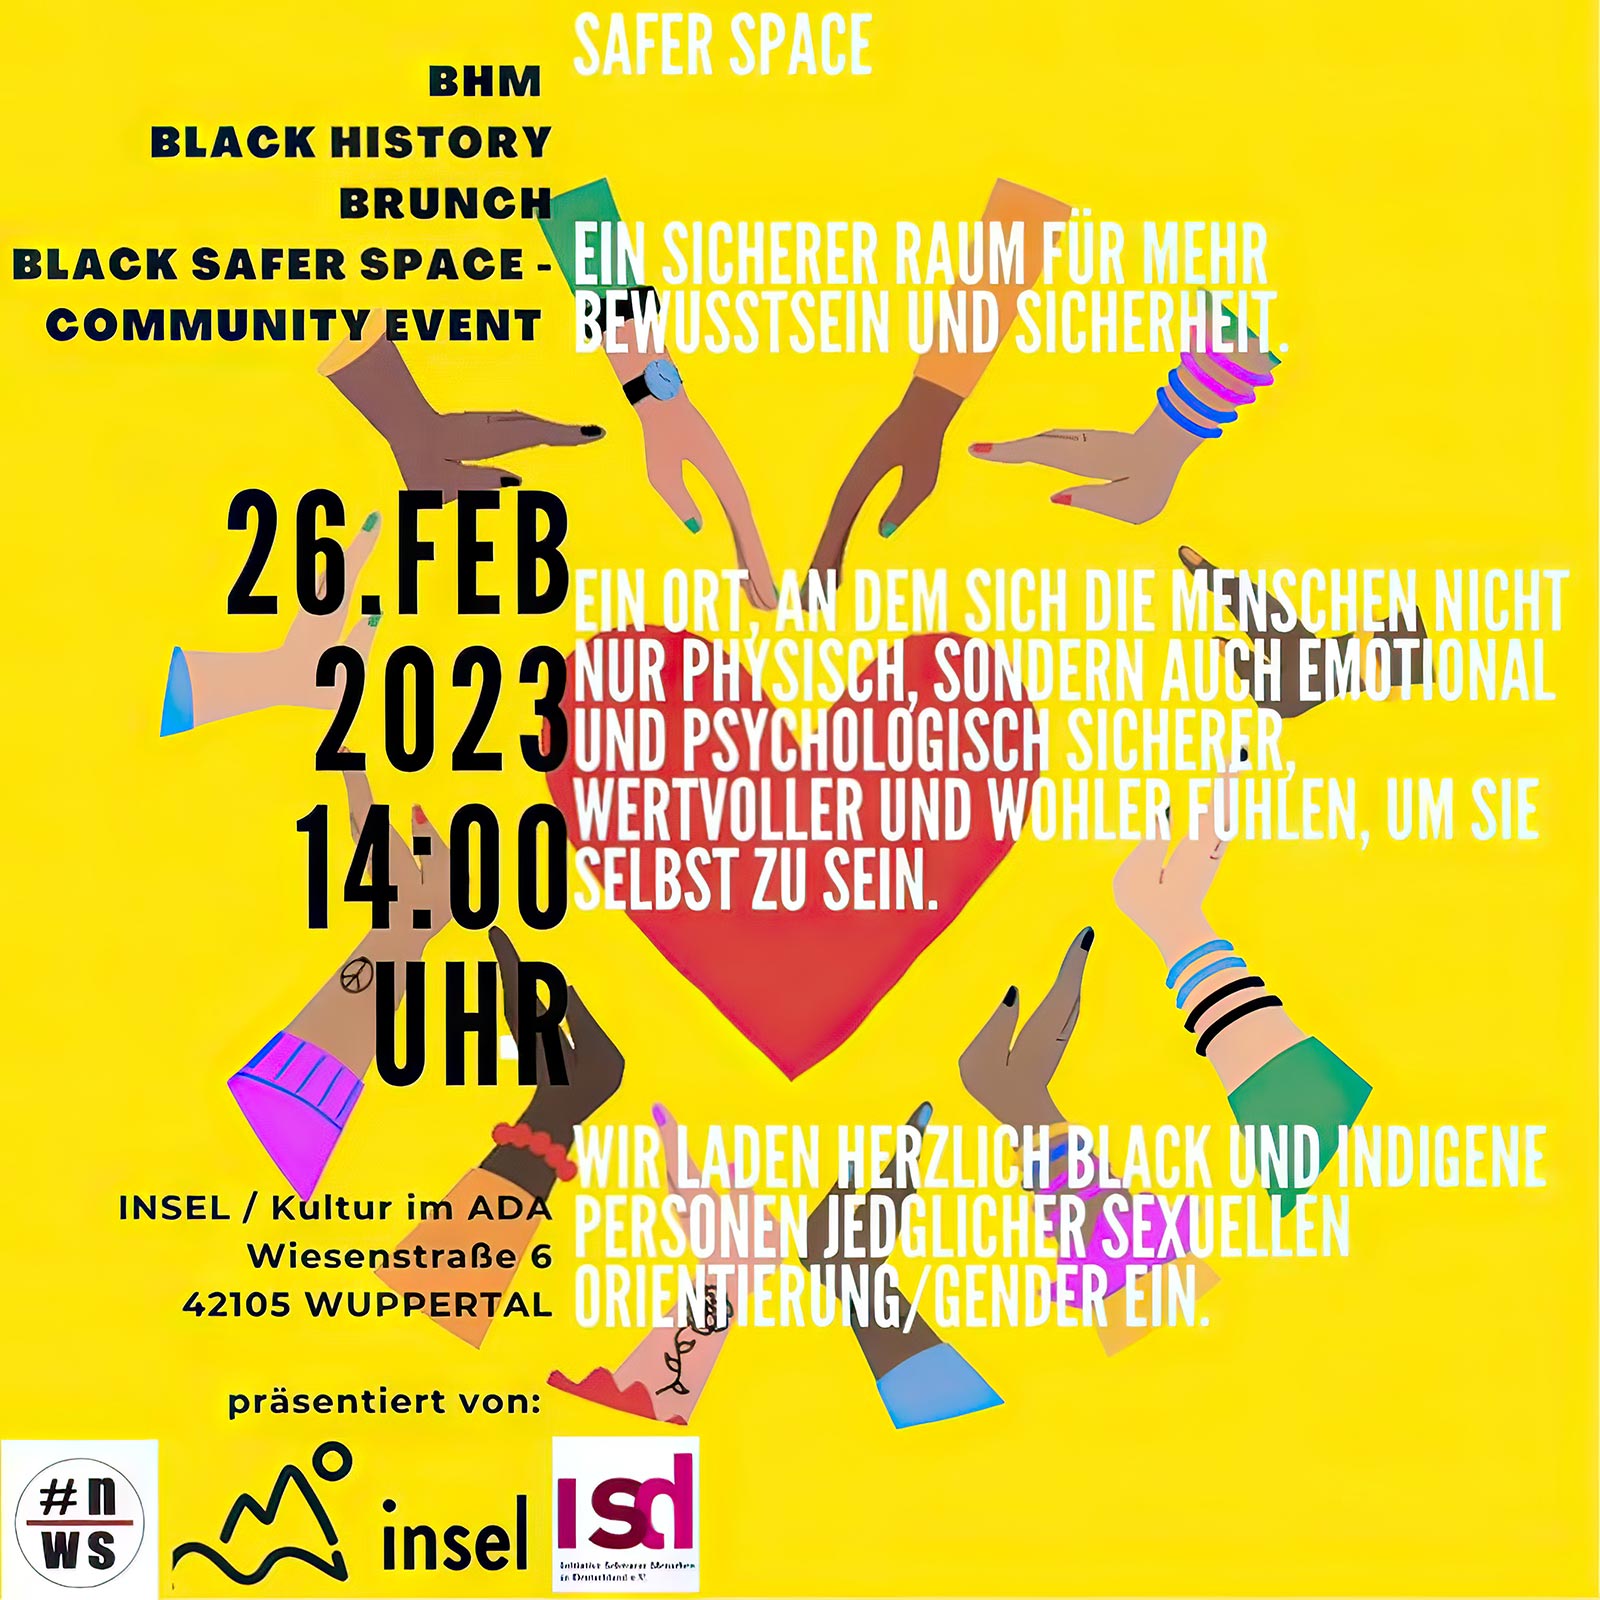 BHM Black History Brunch / Black Safer Space – Community Event